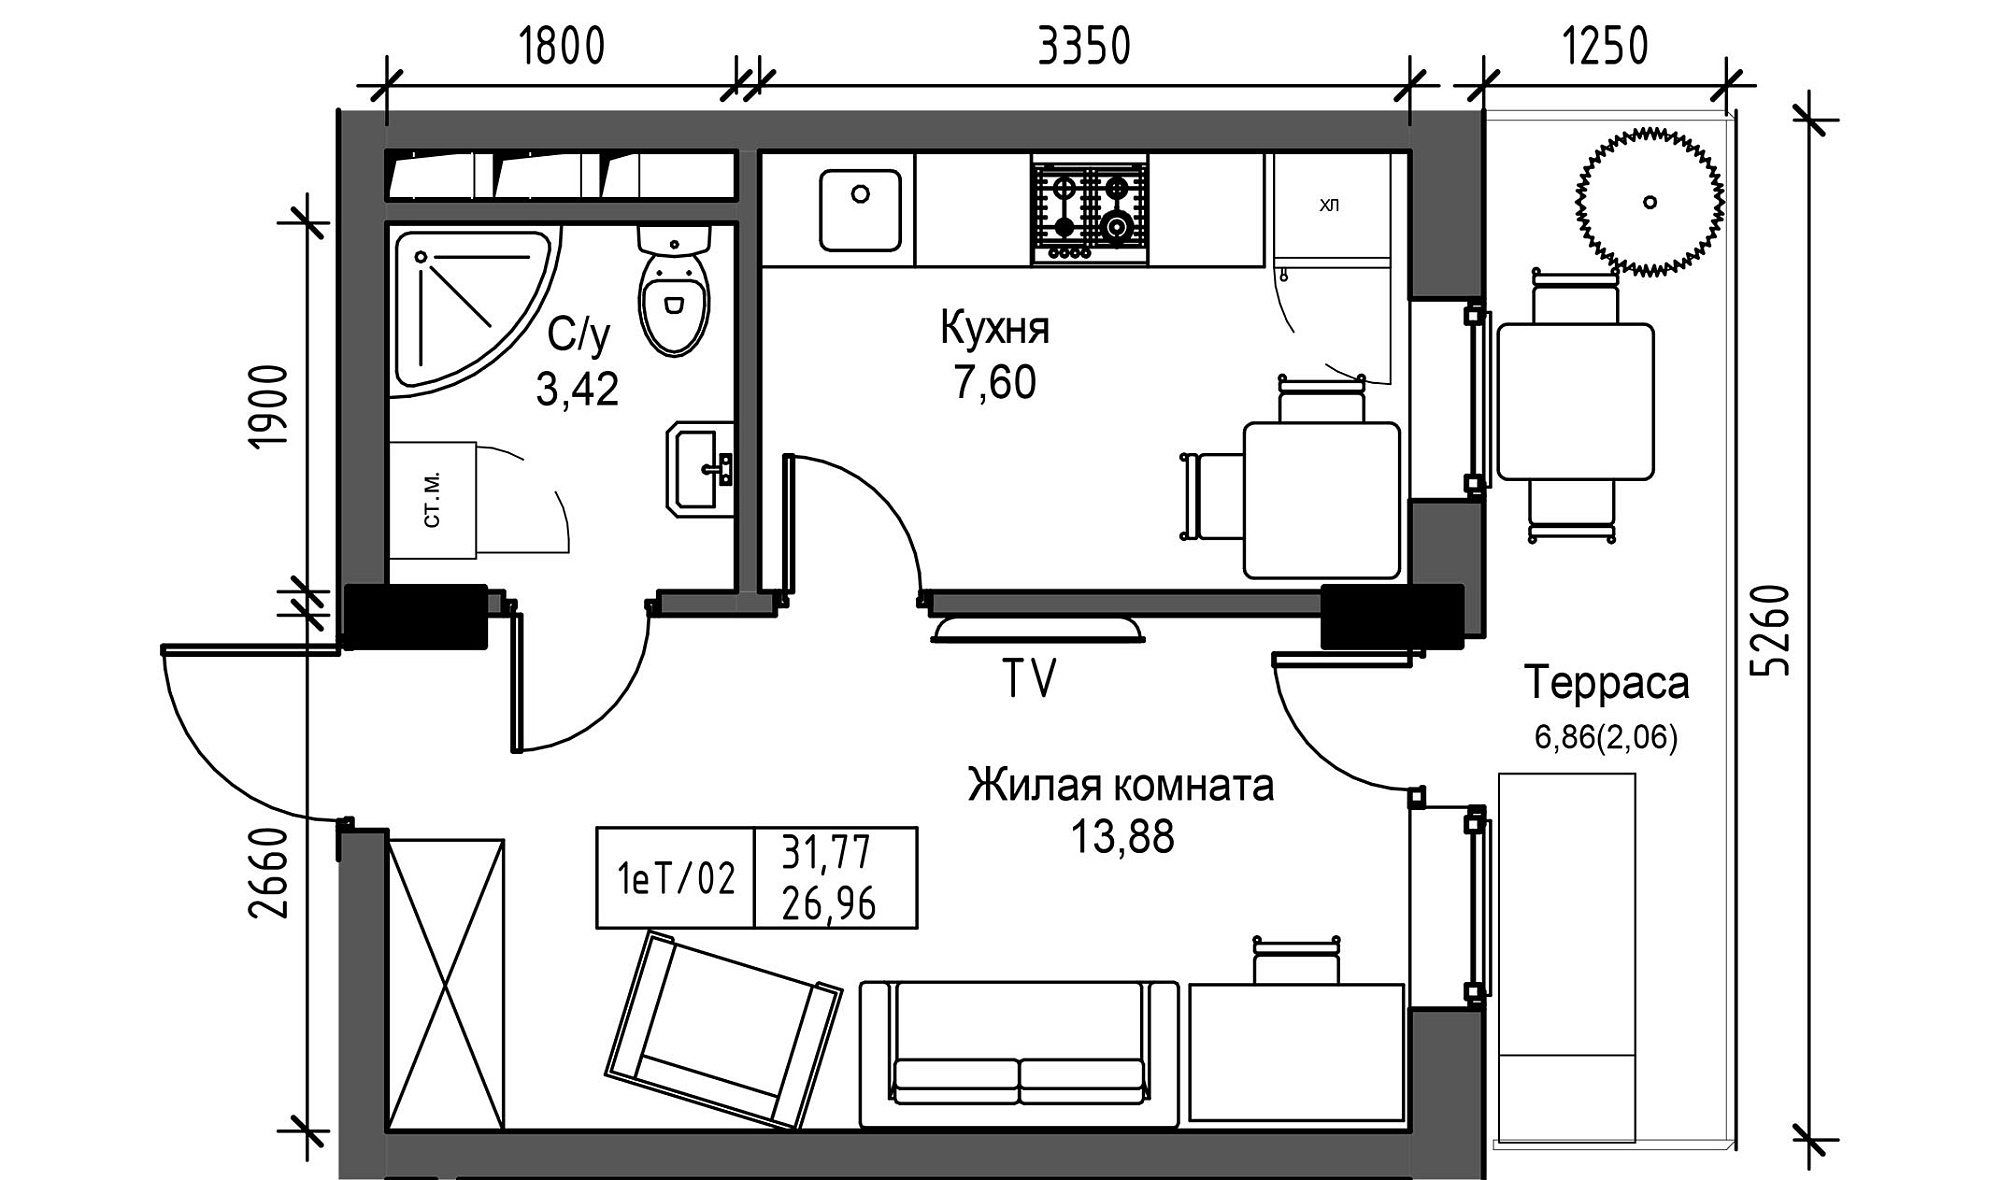 Планування 1-к квартира площею 26.96м2, UM-003-05/0037.